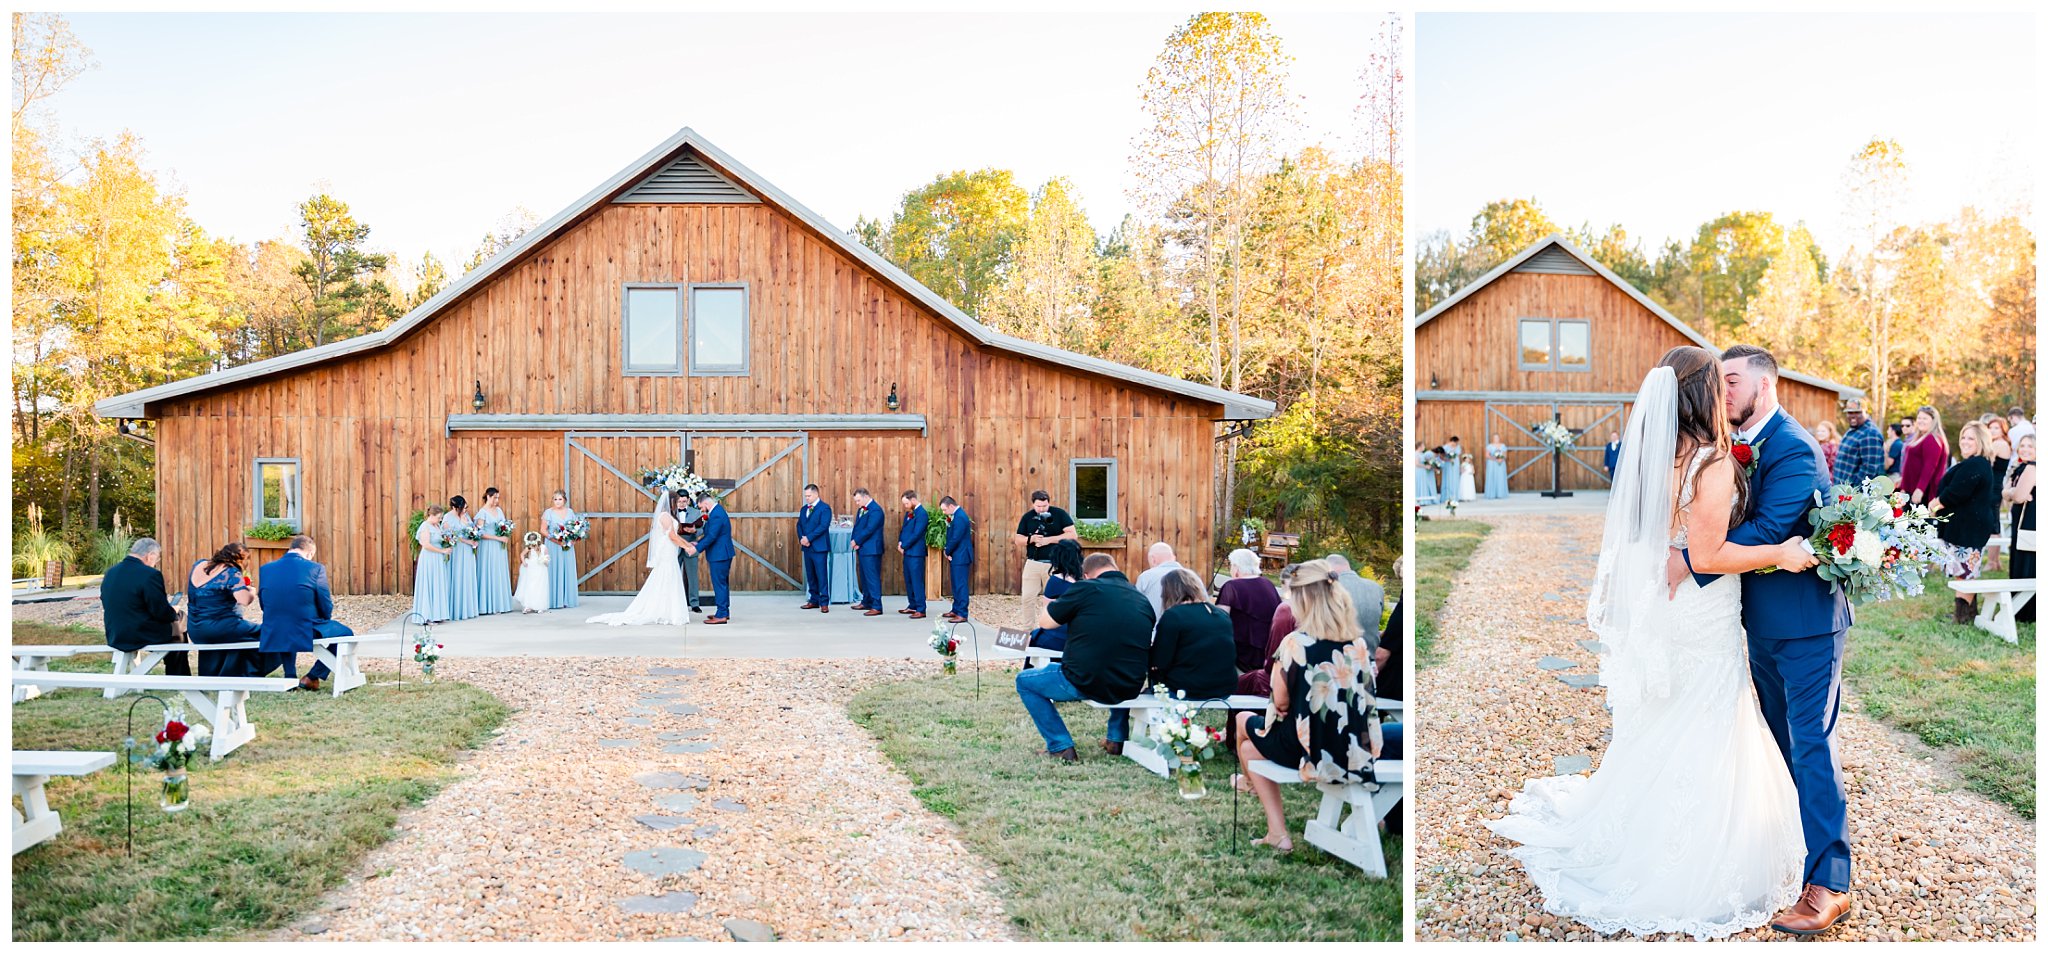 North Carolina wedding photographer captures wedding ceremony